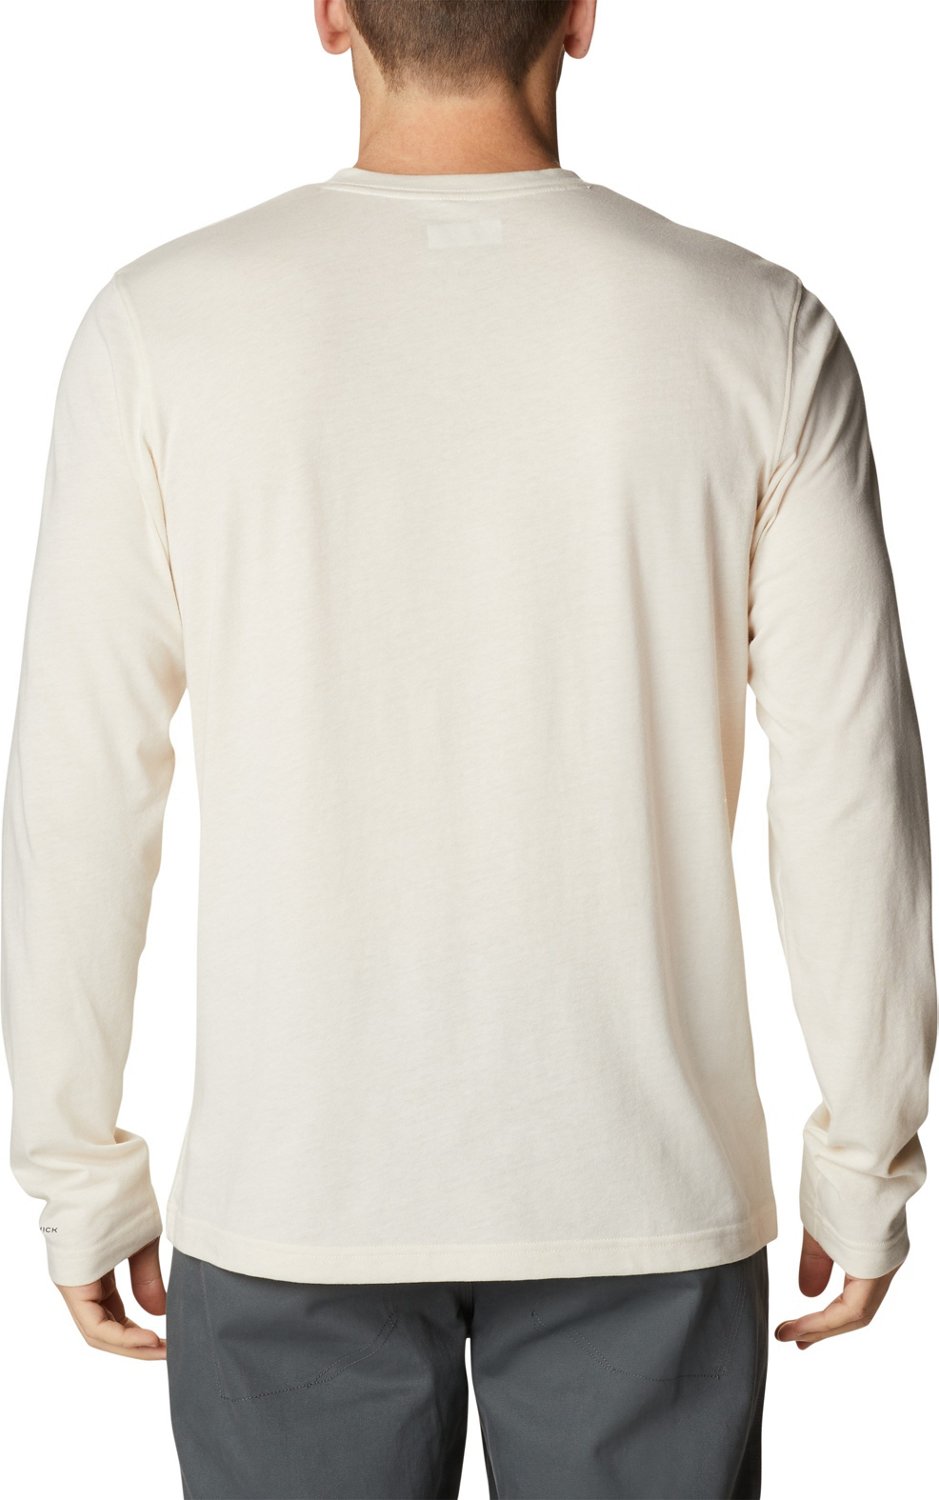 Columbia Sportswear Men's Thistletown Hills Long Sleeve Henley Shirt